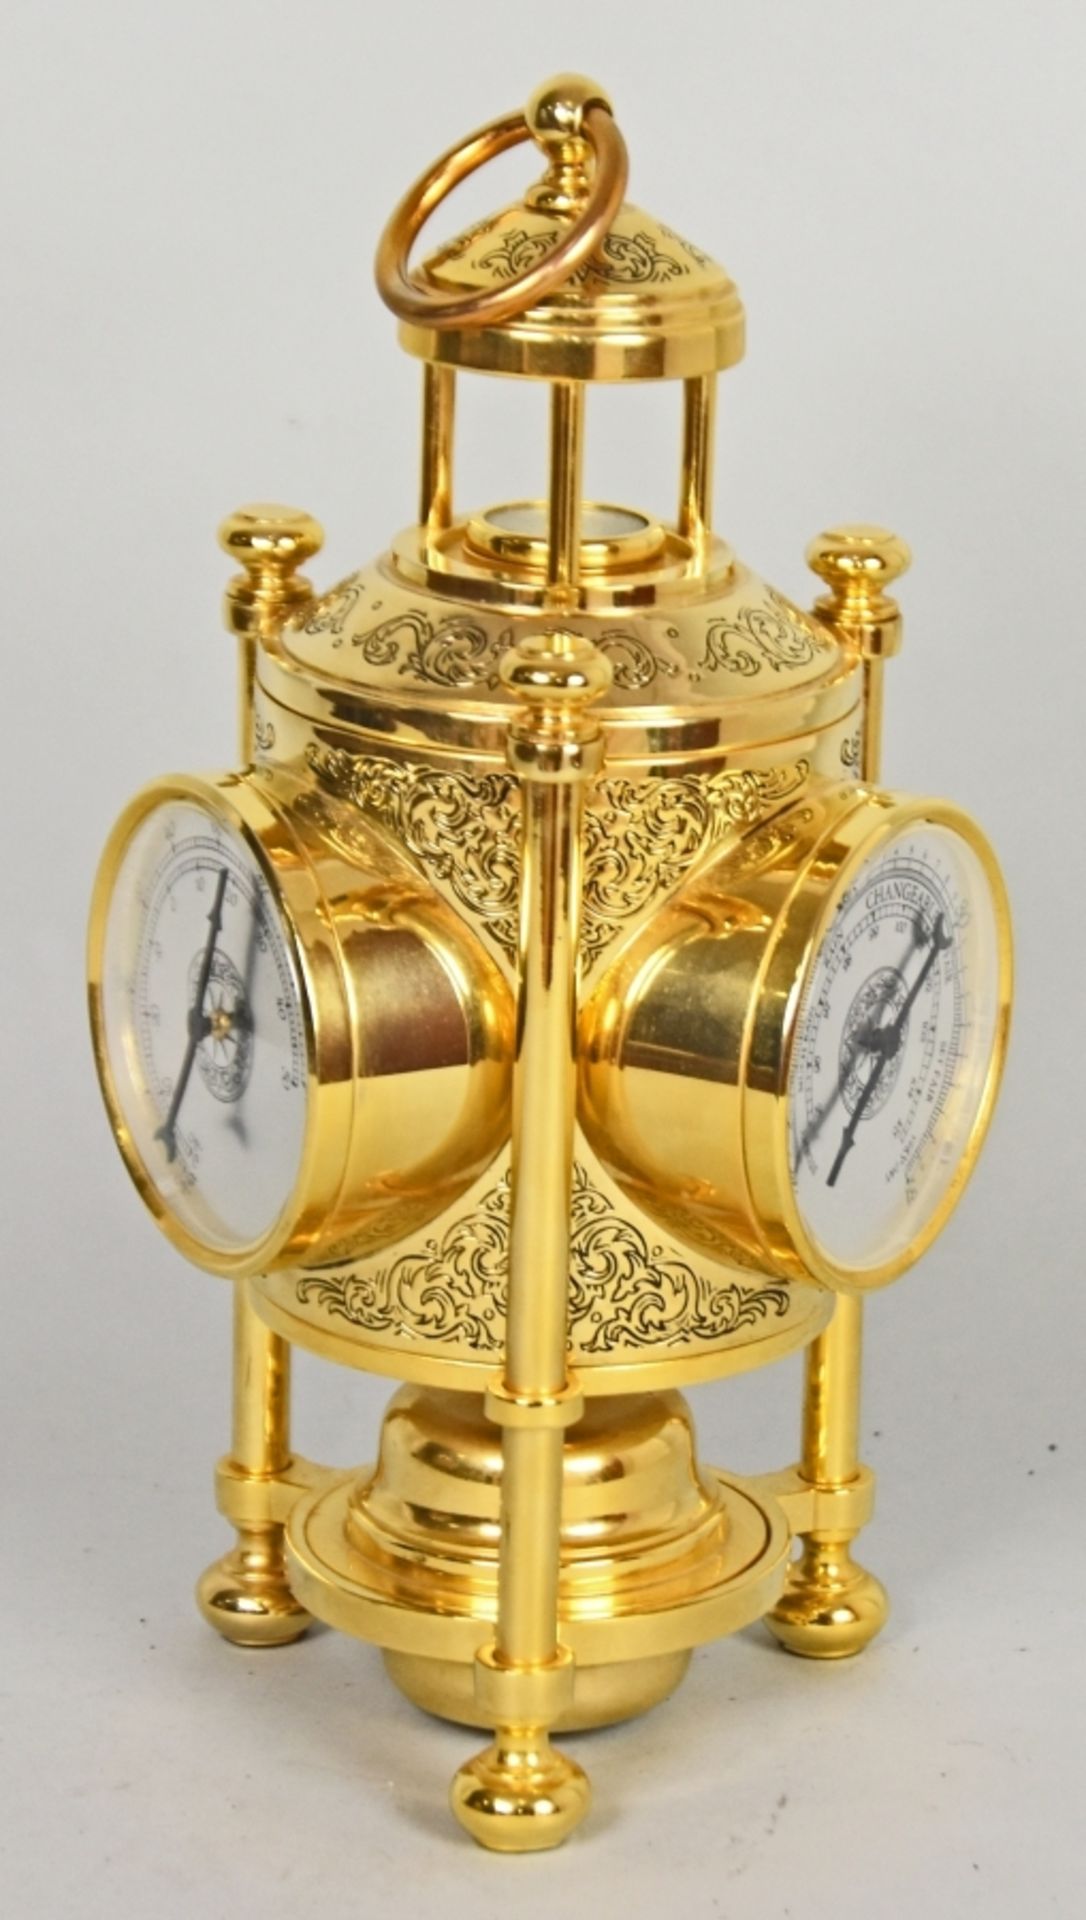 BAROMETER-UHR mit Thermometer und Kompass - Image 3 of 3